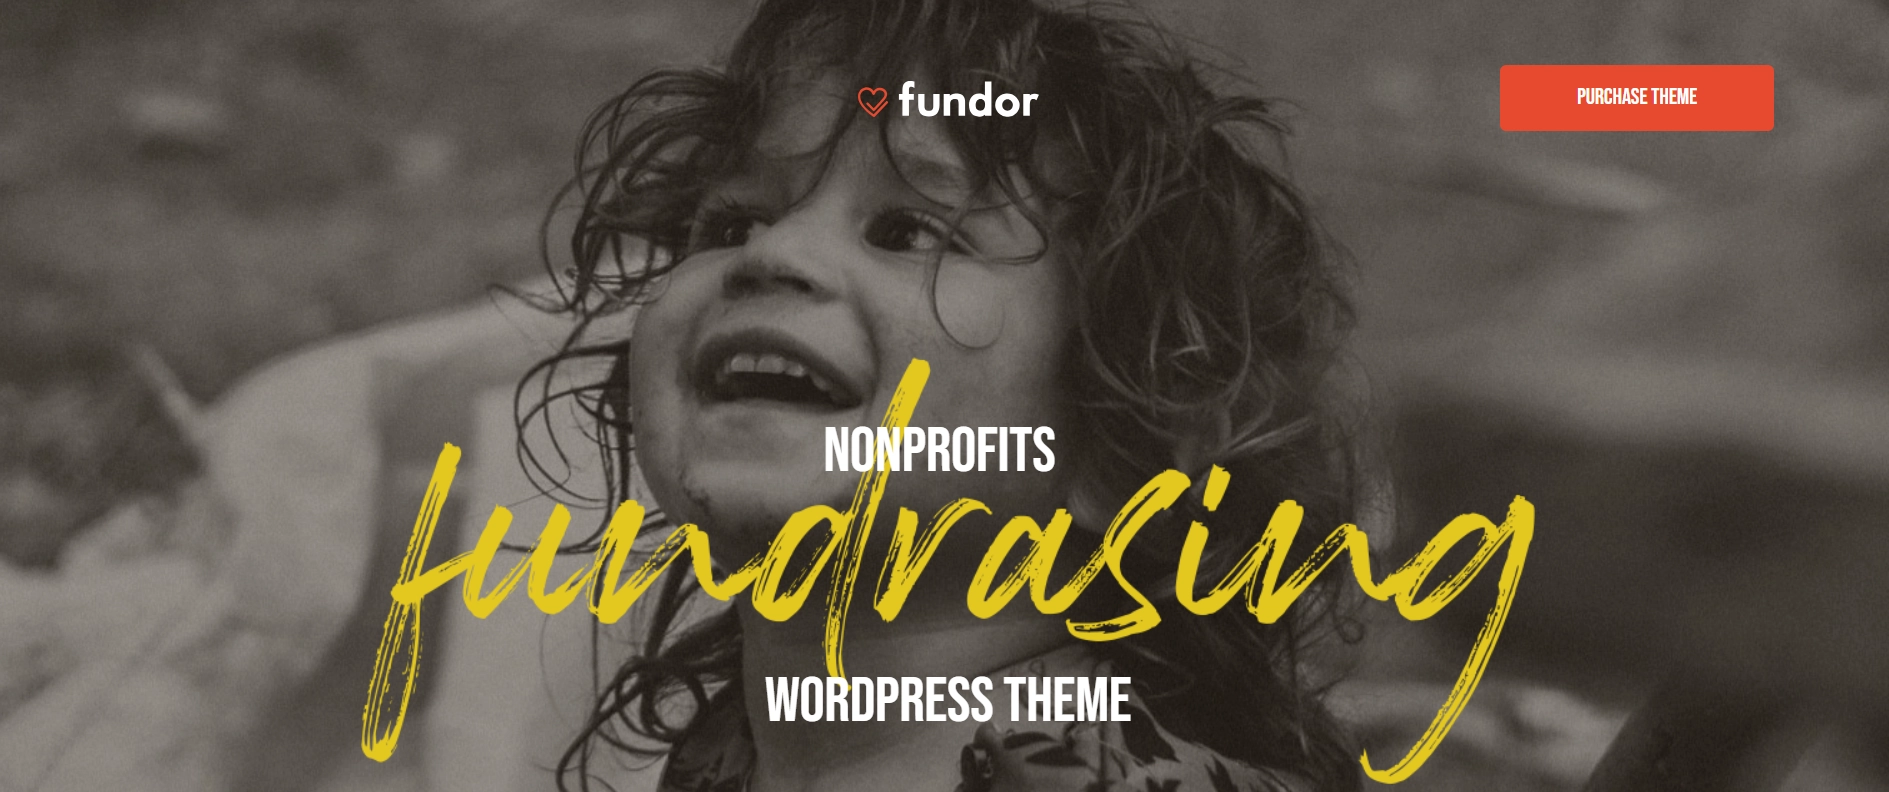 Fundor Nonprofit WordPress Theme